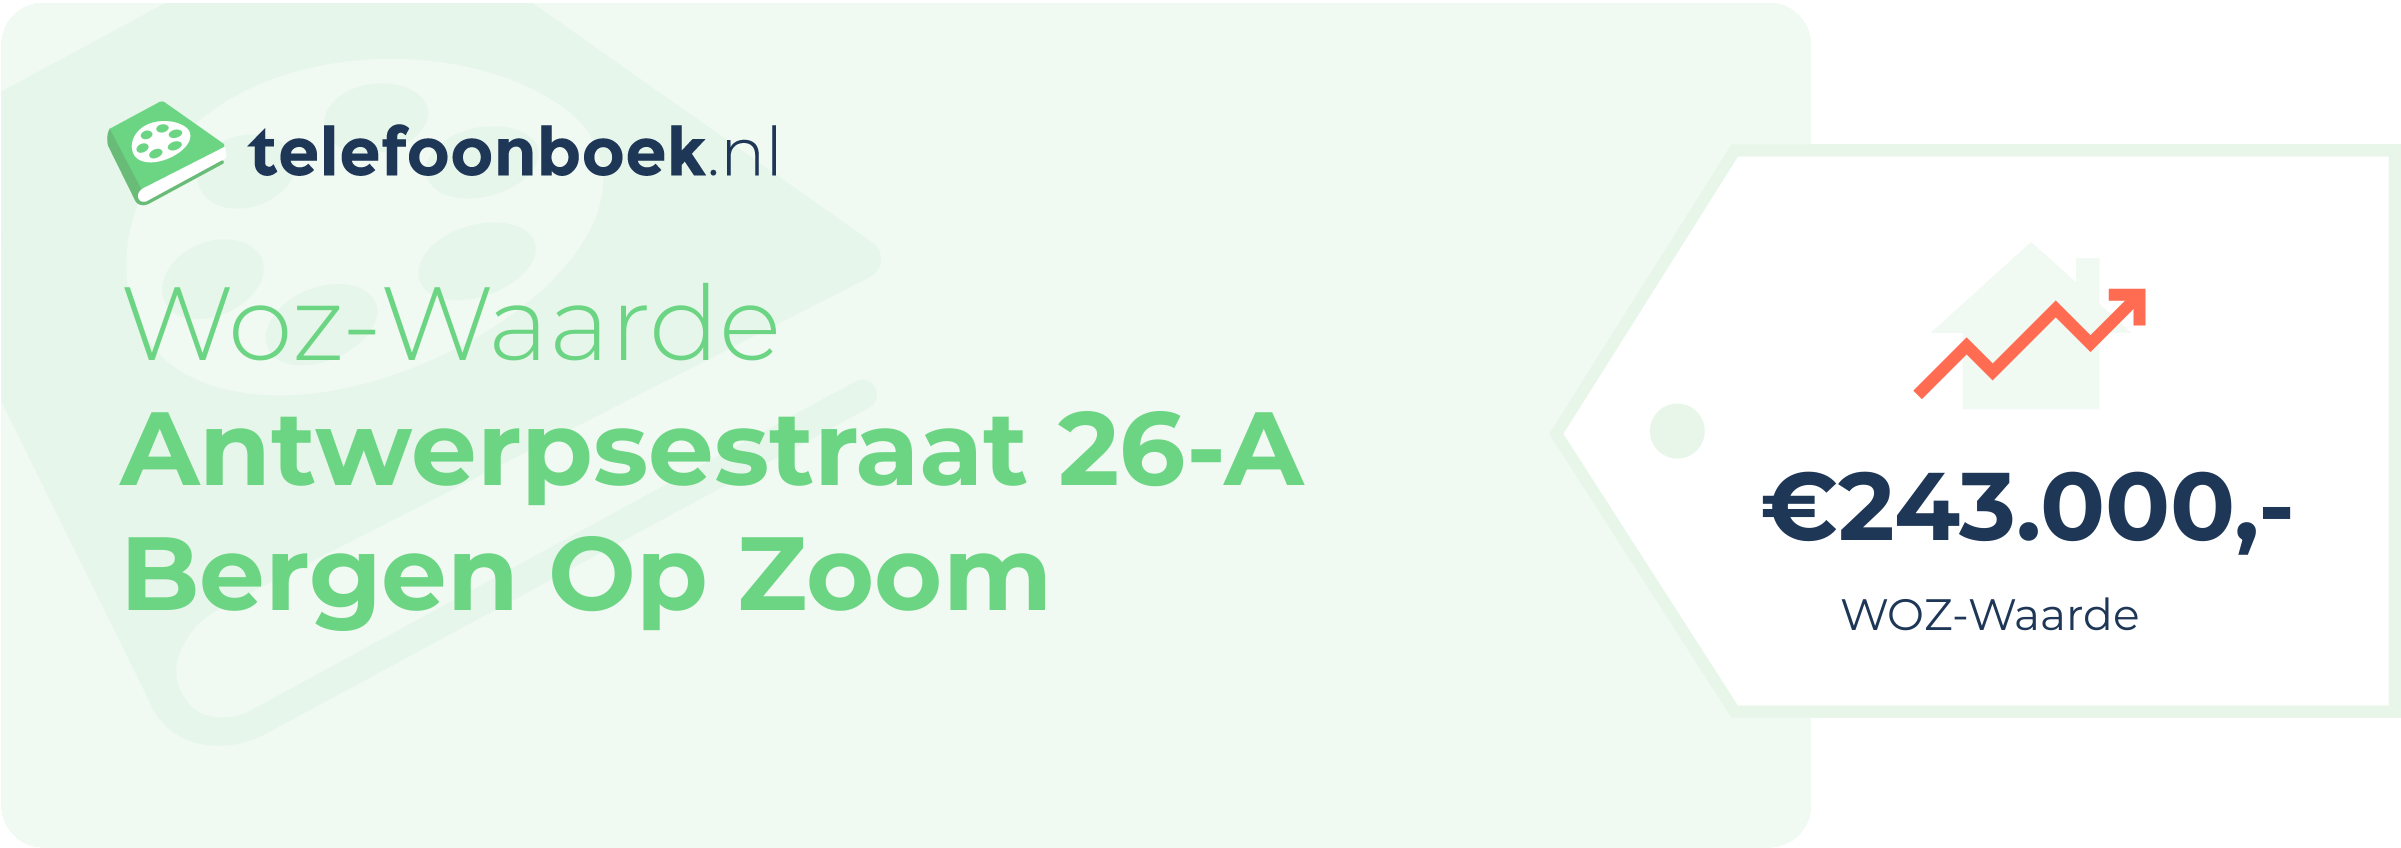 WOZ-waarde Antwerpsestraat 26-A Bergen Op Zoom